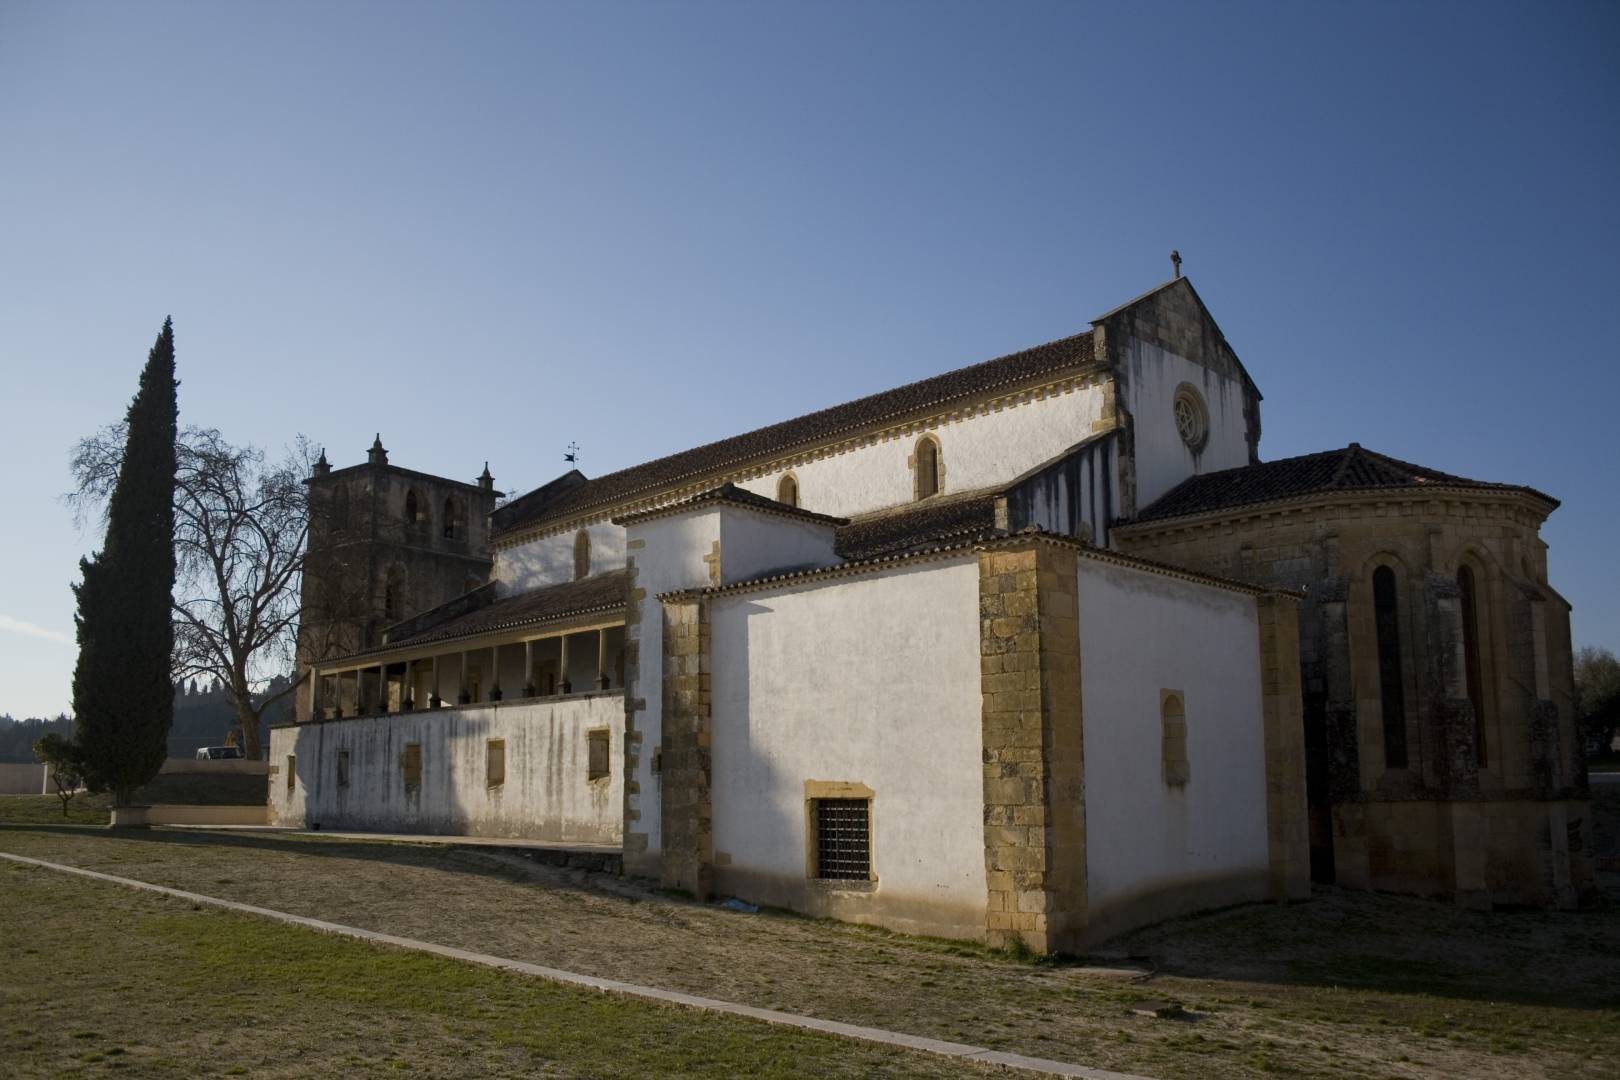 Igreja de Santa Maria dos Olivais